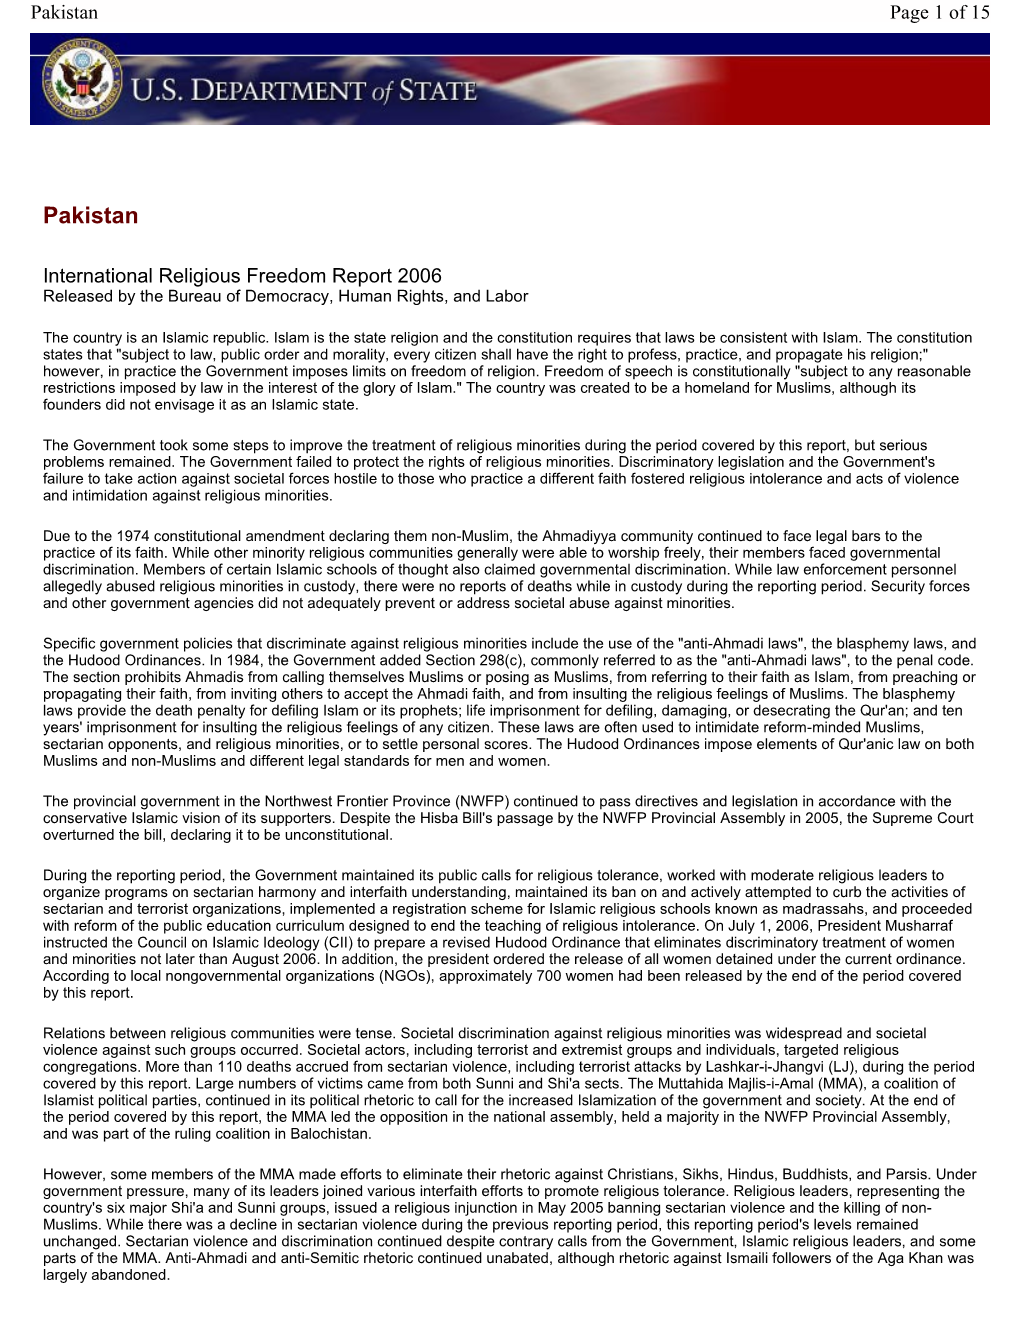 Report on International Religious Freedom 2006: Pakistan